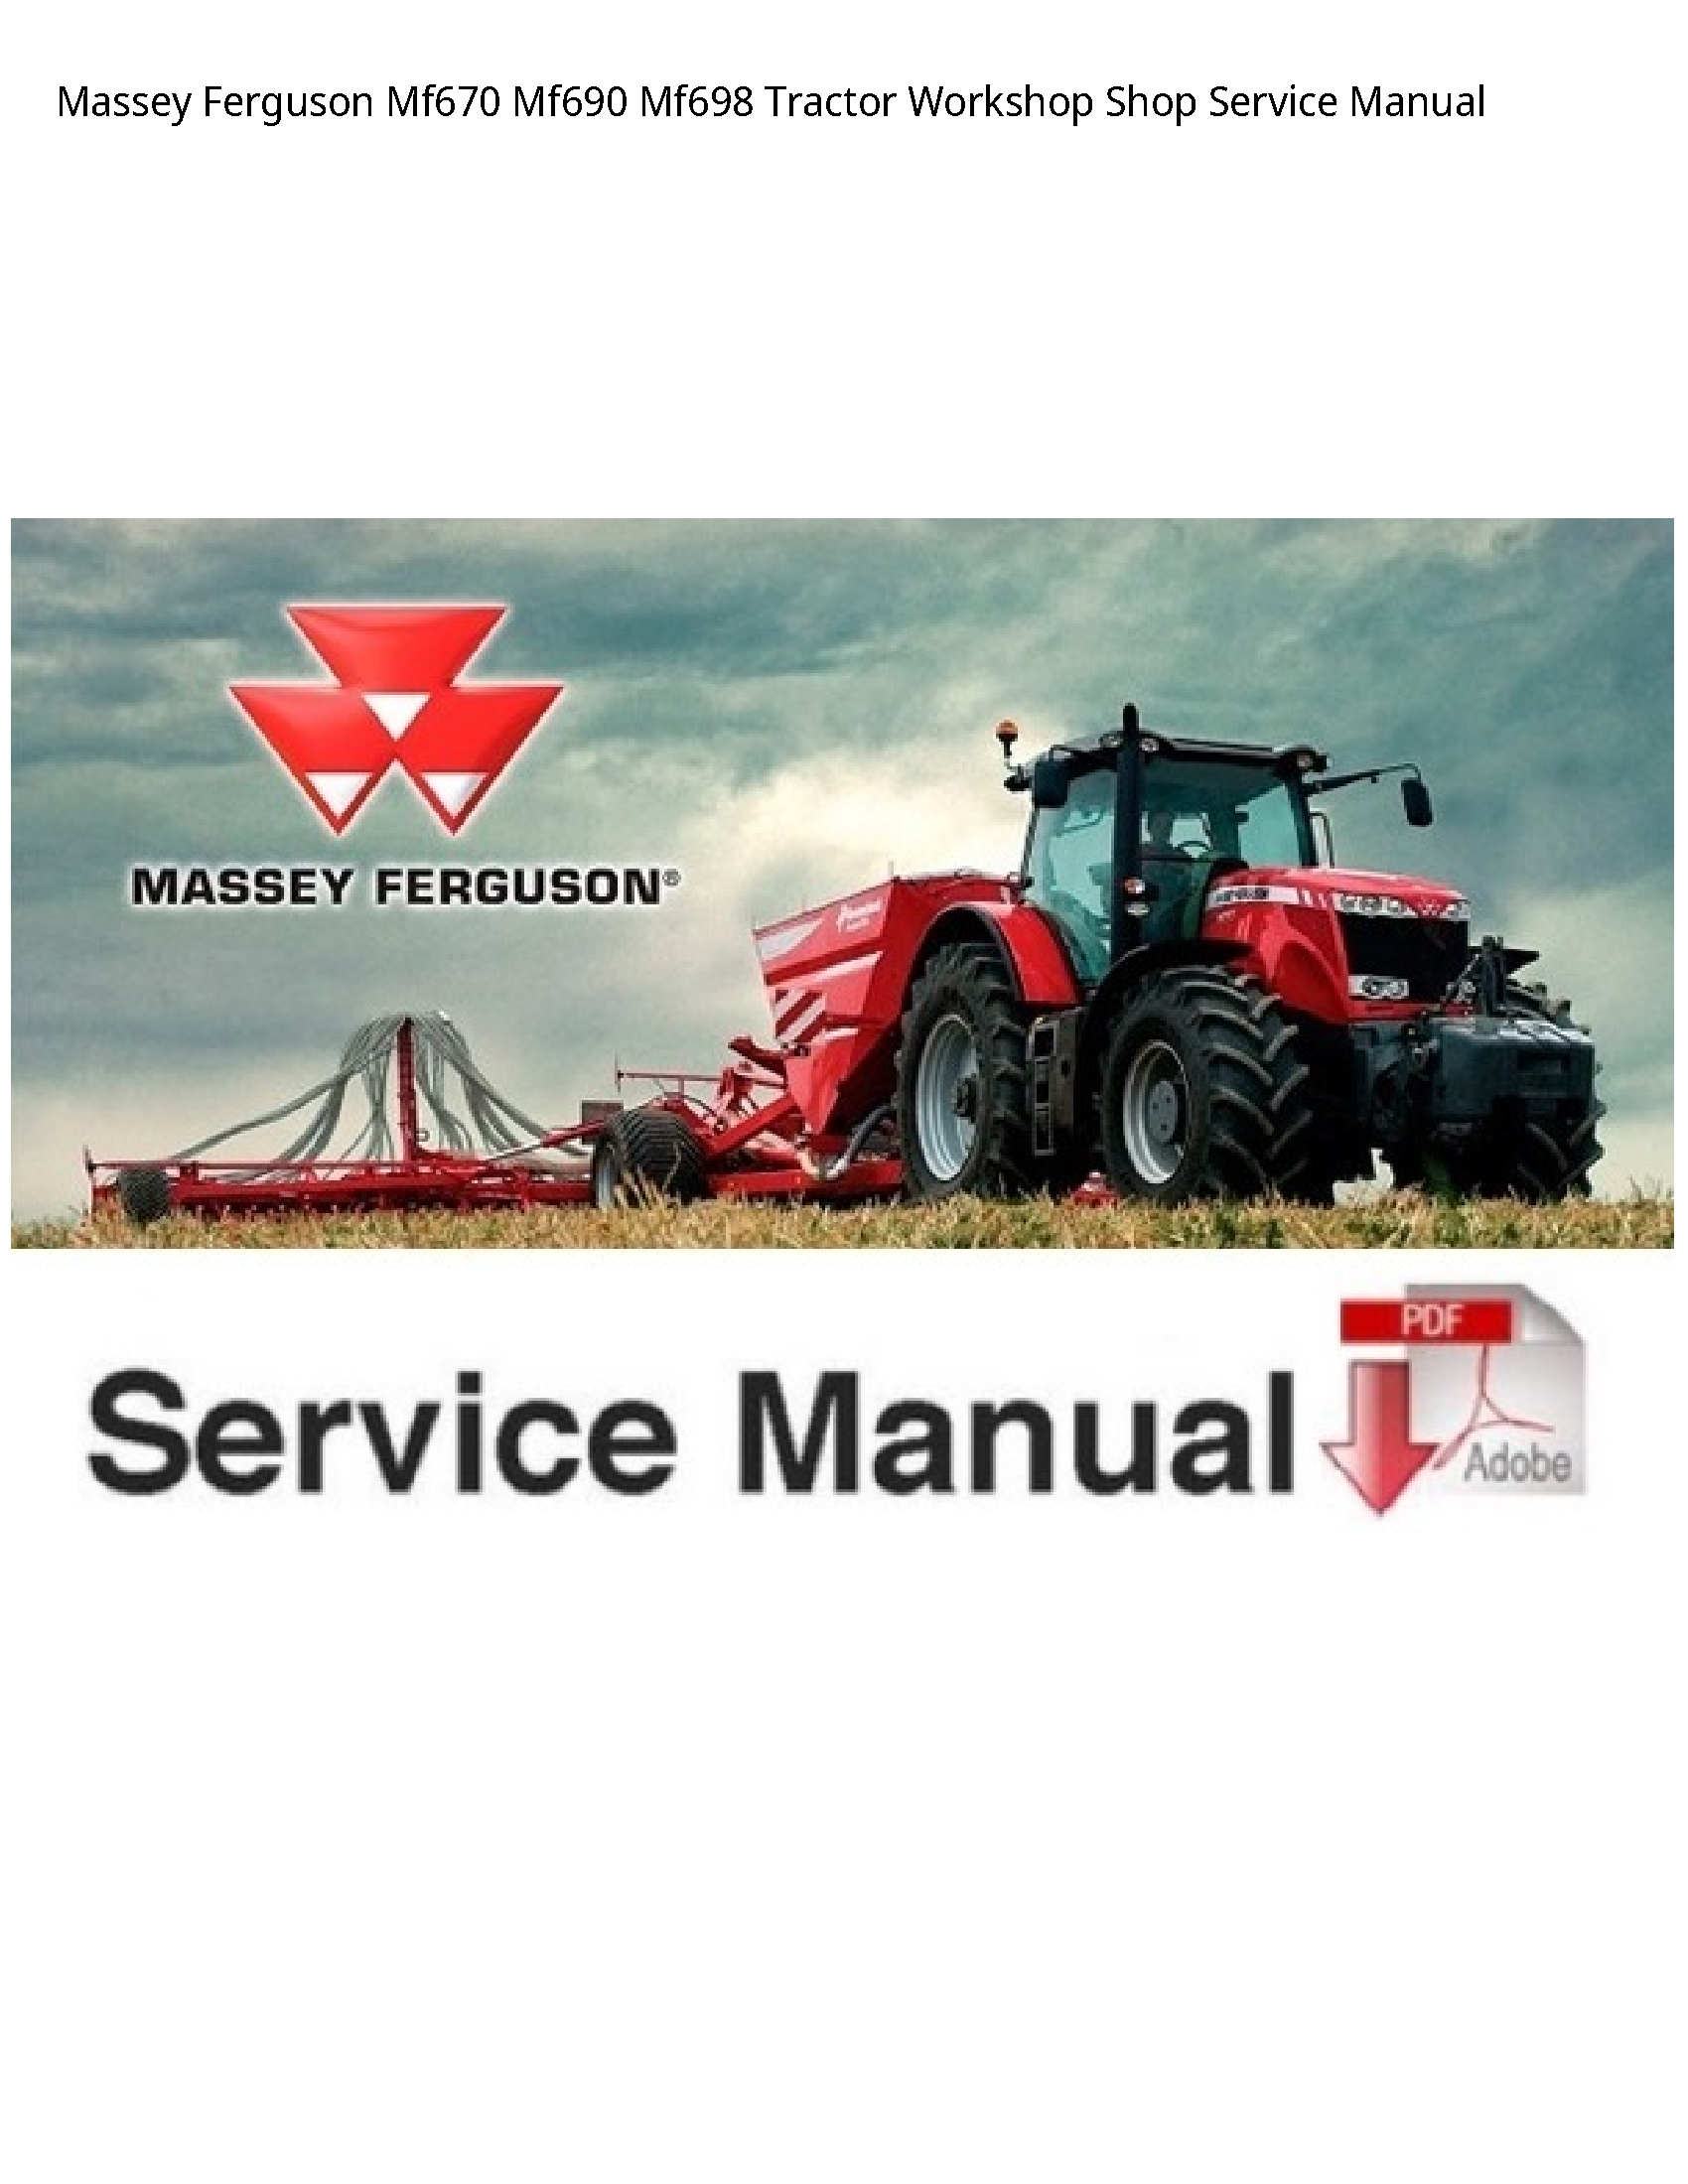 Massey Ferguson Mf670 Tractor Shop Service manual